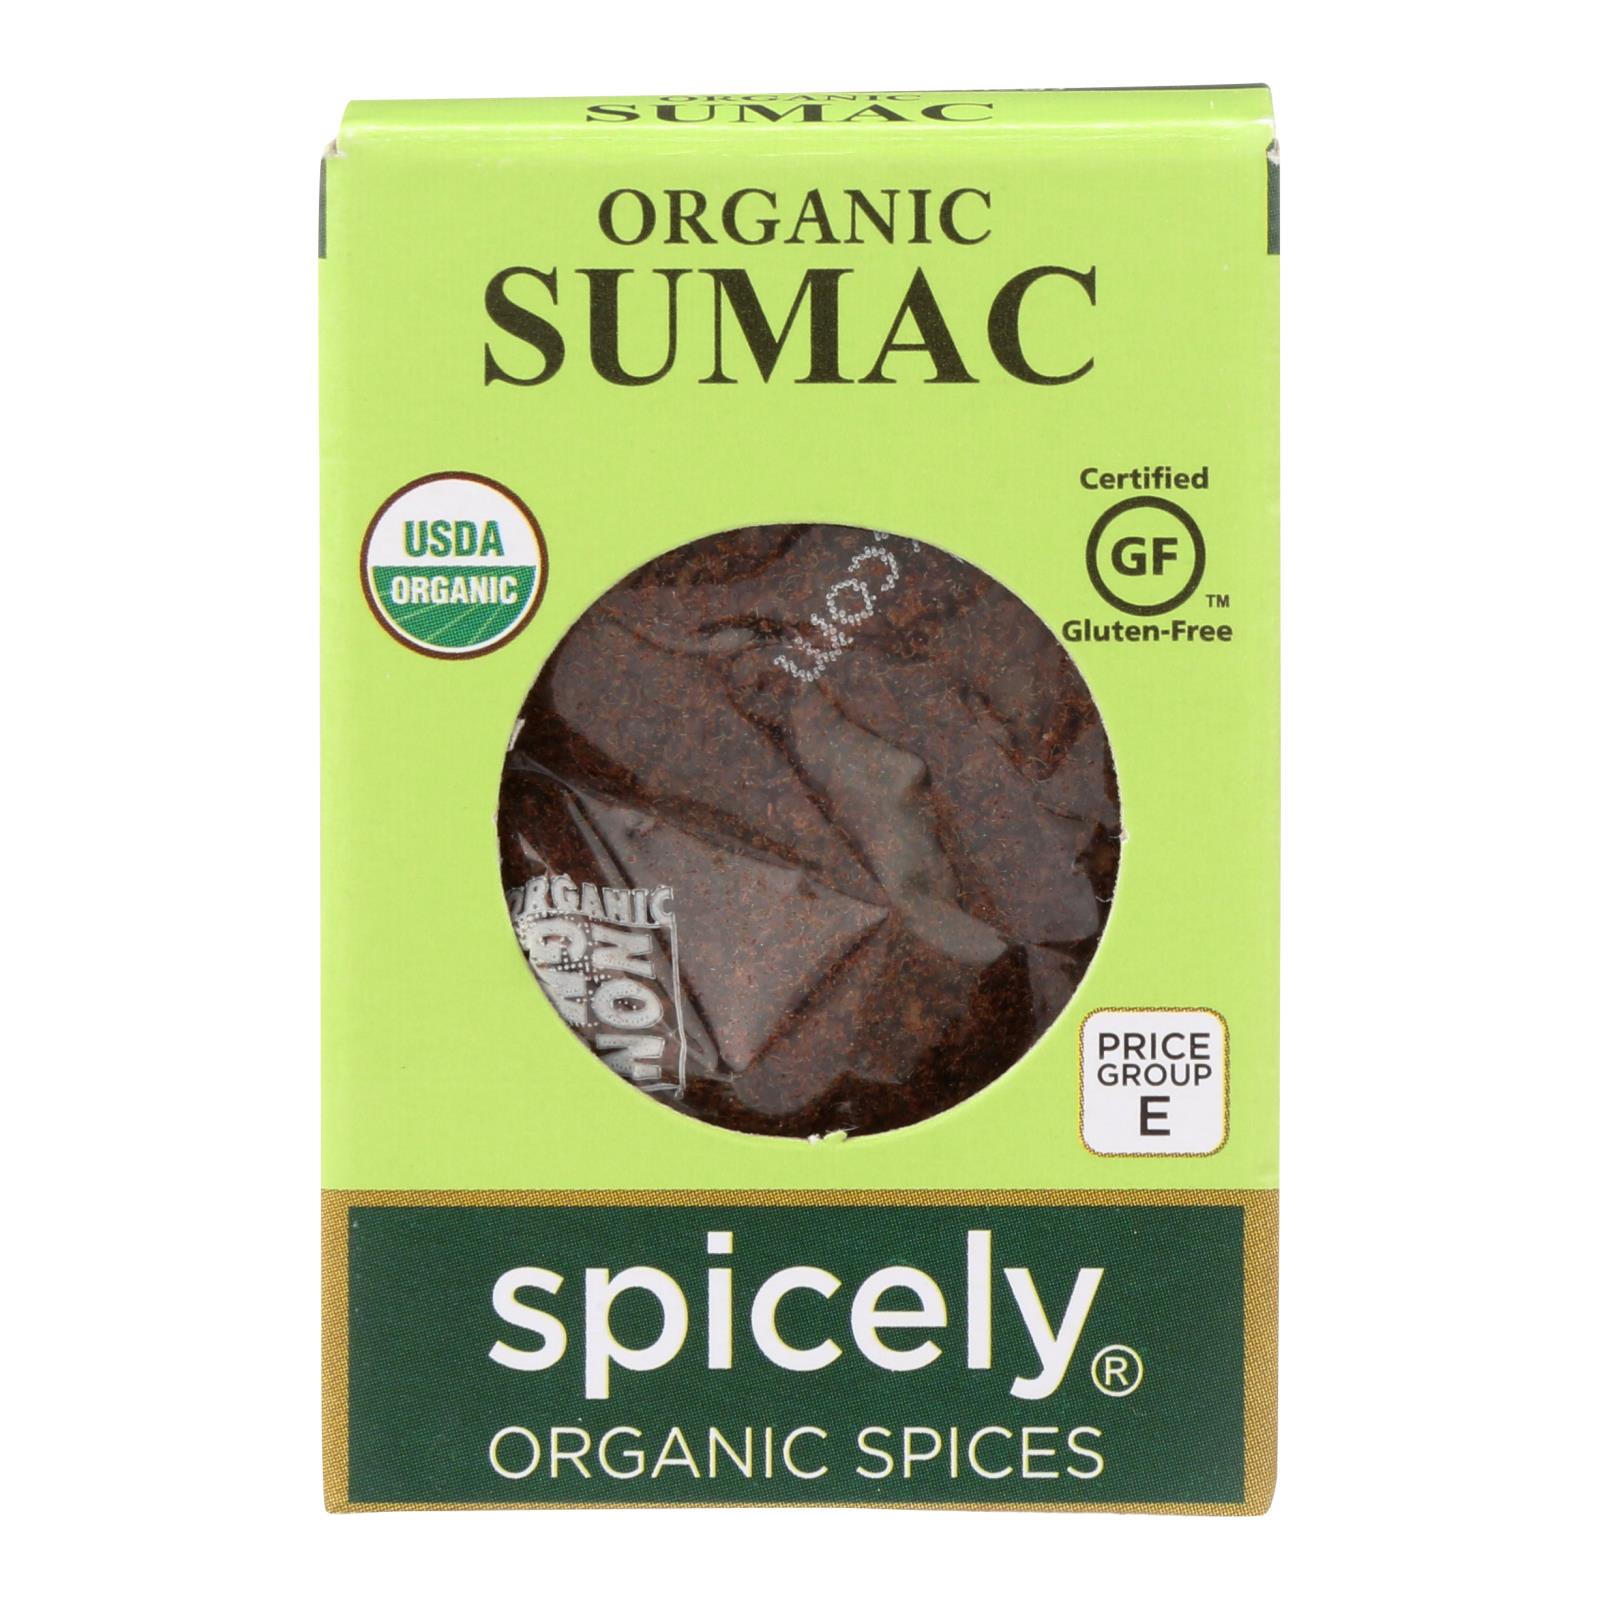 Spicely Organics - Organic Sumac - 6개 묶음상품 - 0.45 oz.